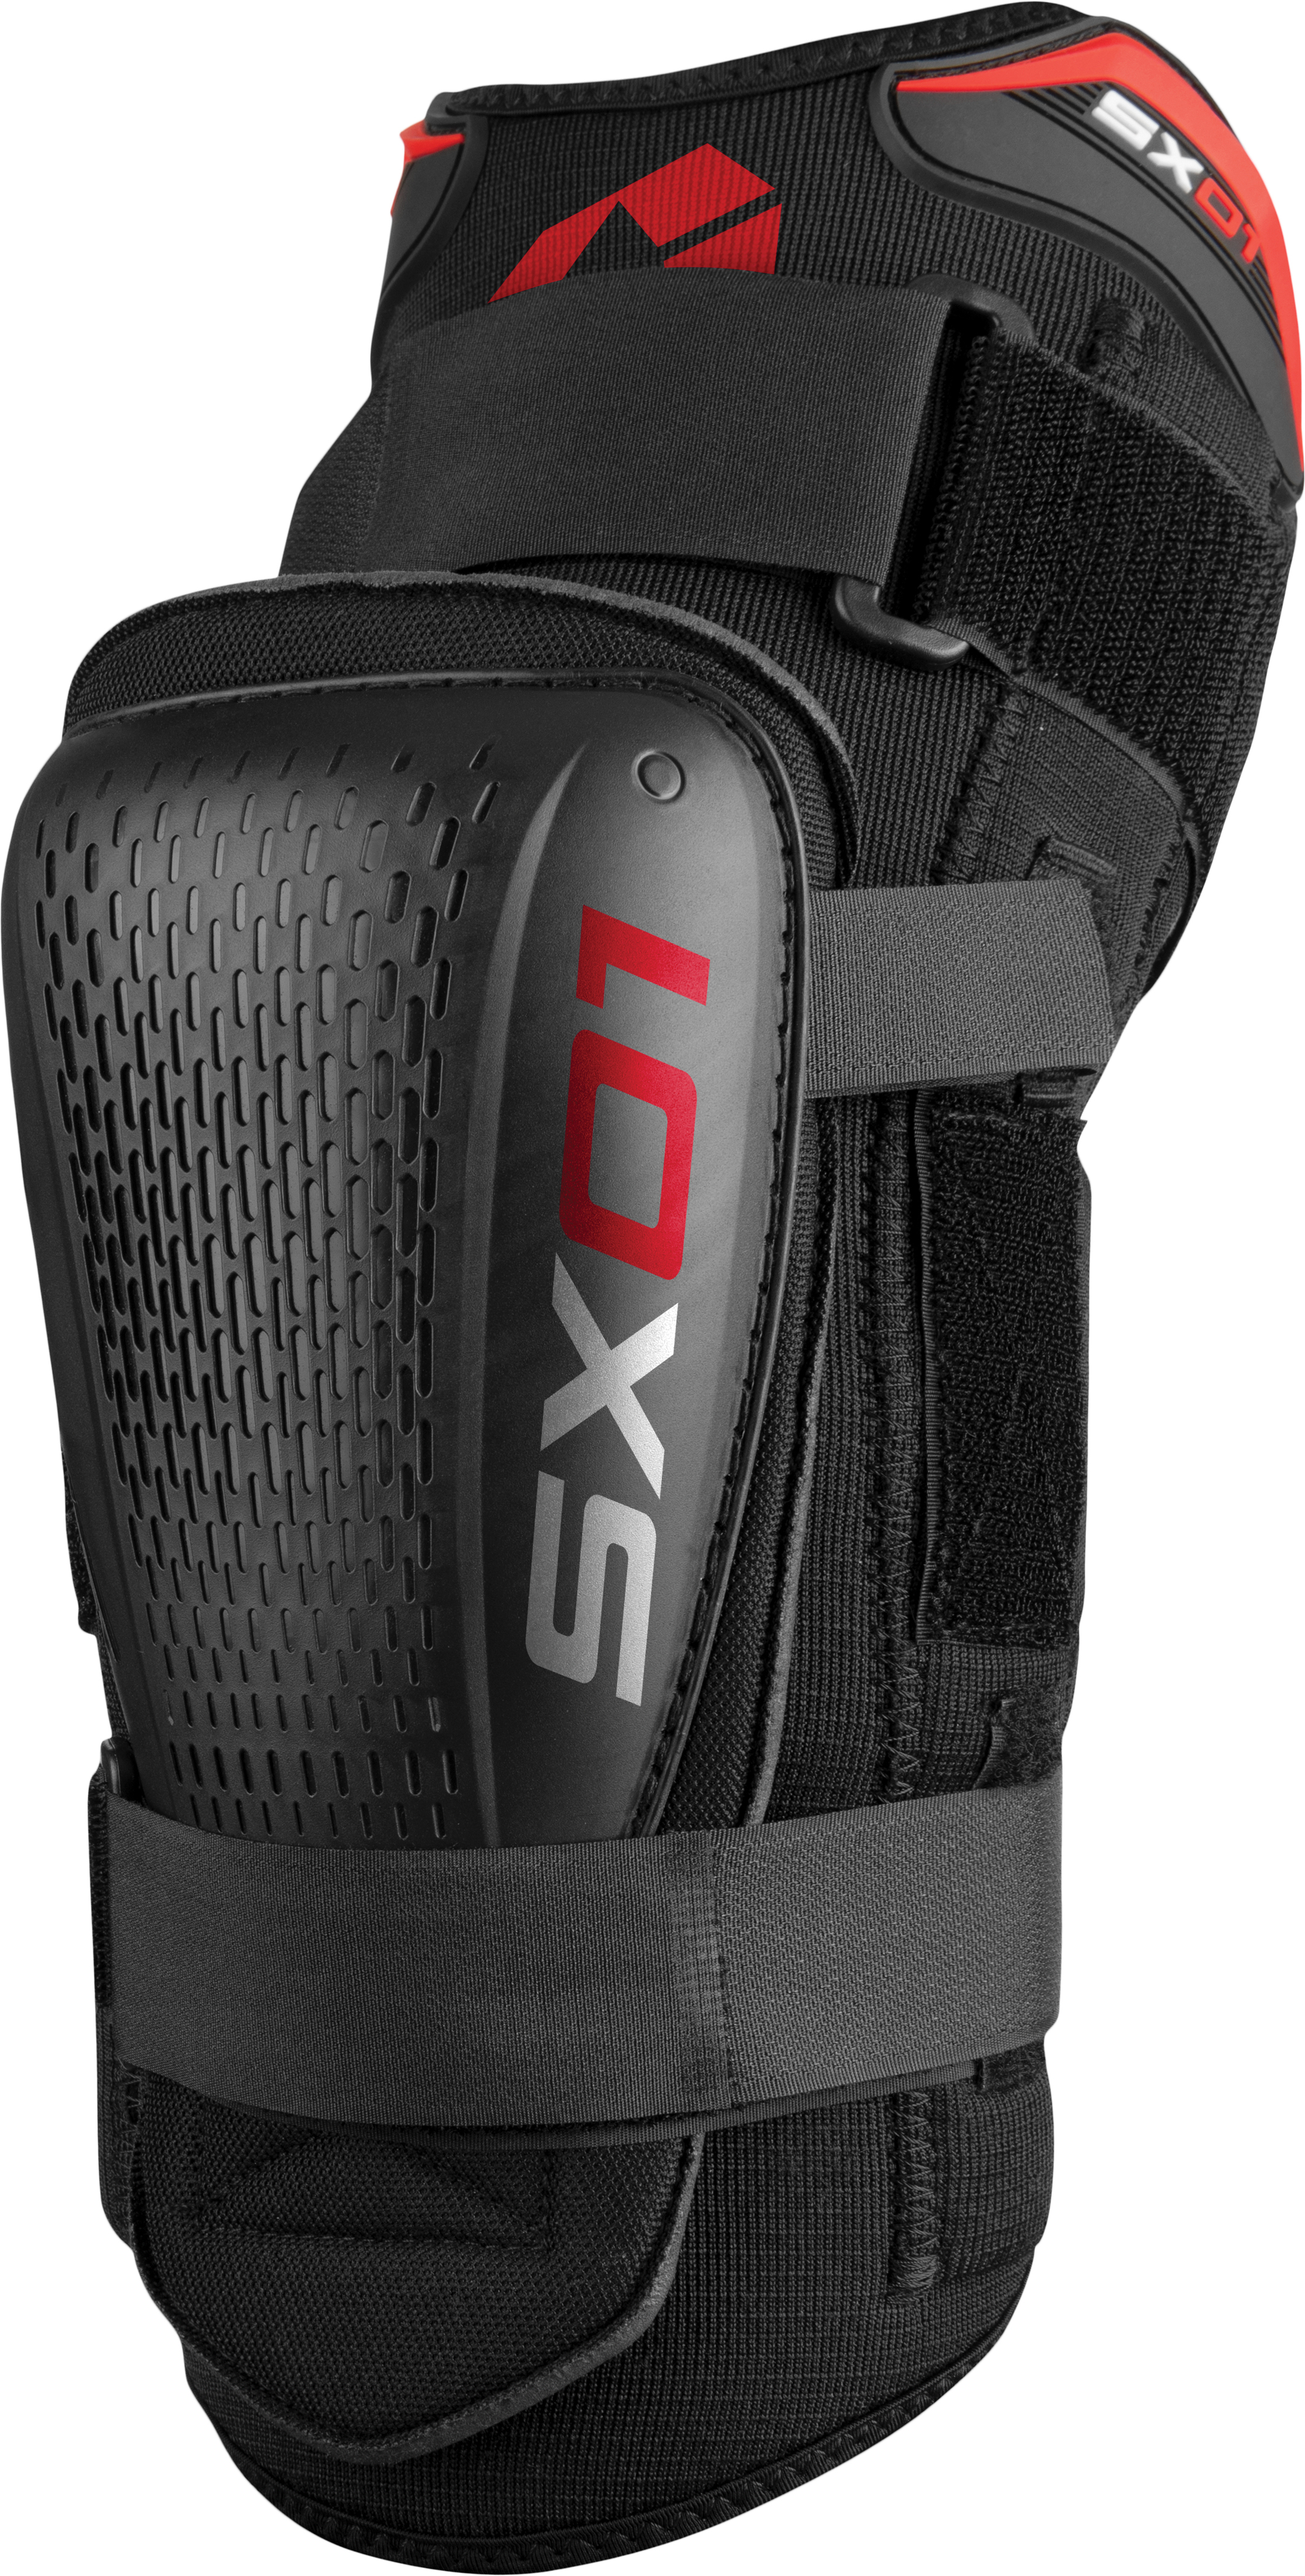 SX01 Knee Brace - Single, Black Small - Click Image to Close